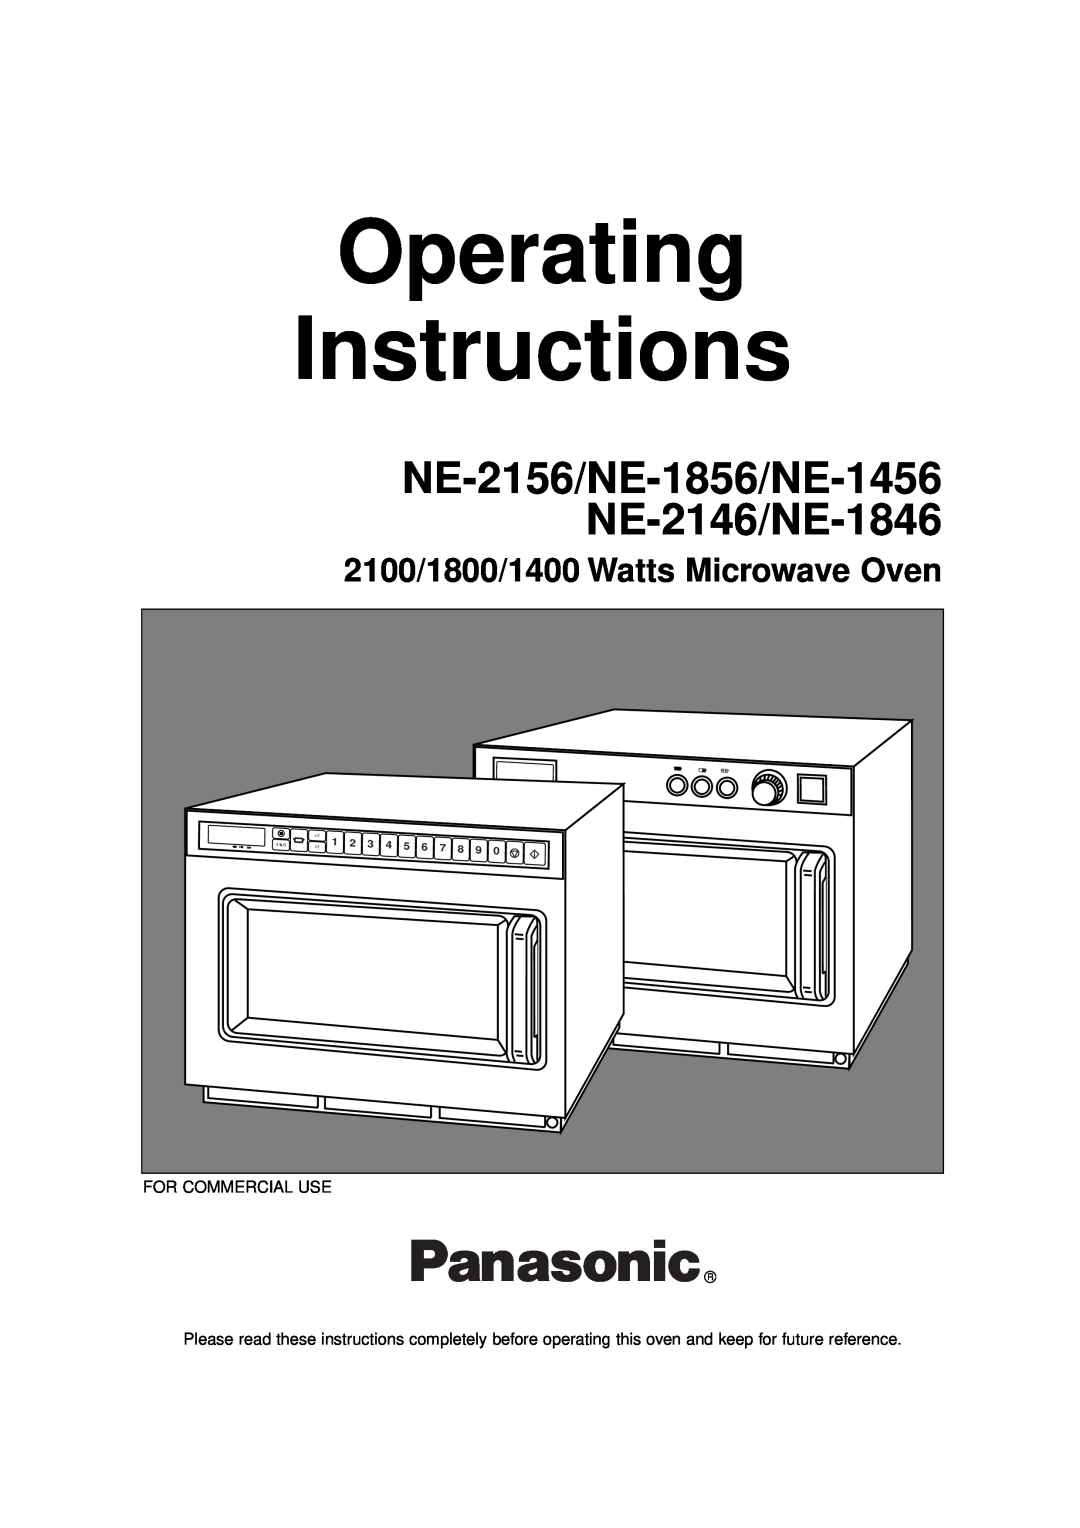 Panasonic NE-1846, NE-1856, NE-2146 operating instructions 2100/1800/1400 Watts Microwave Oven, Operating Instructions 